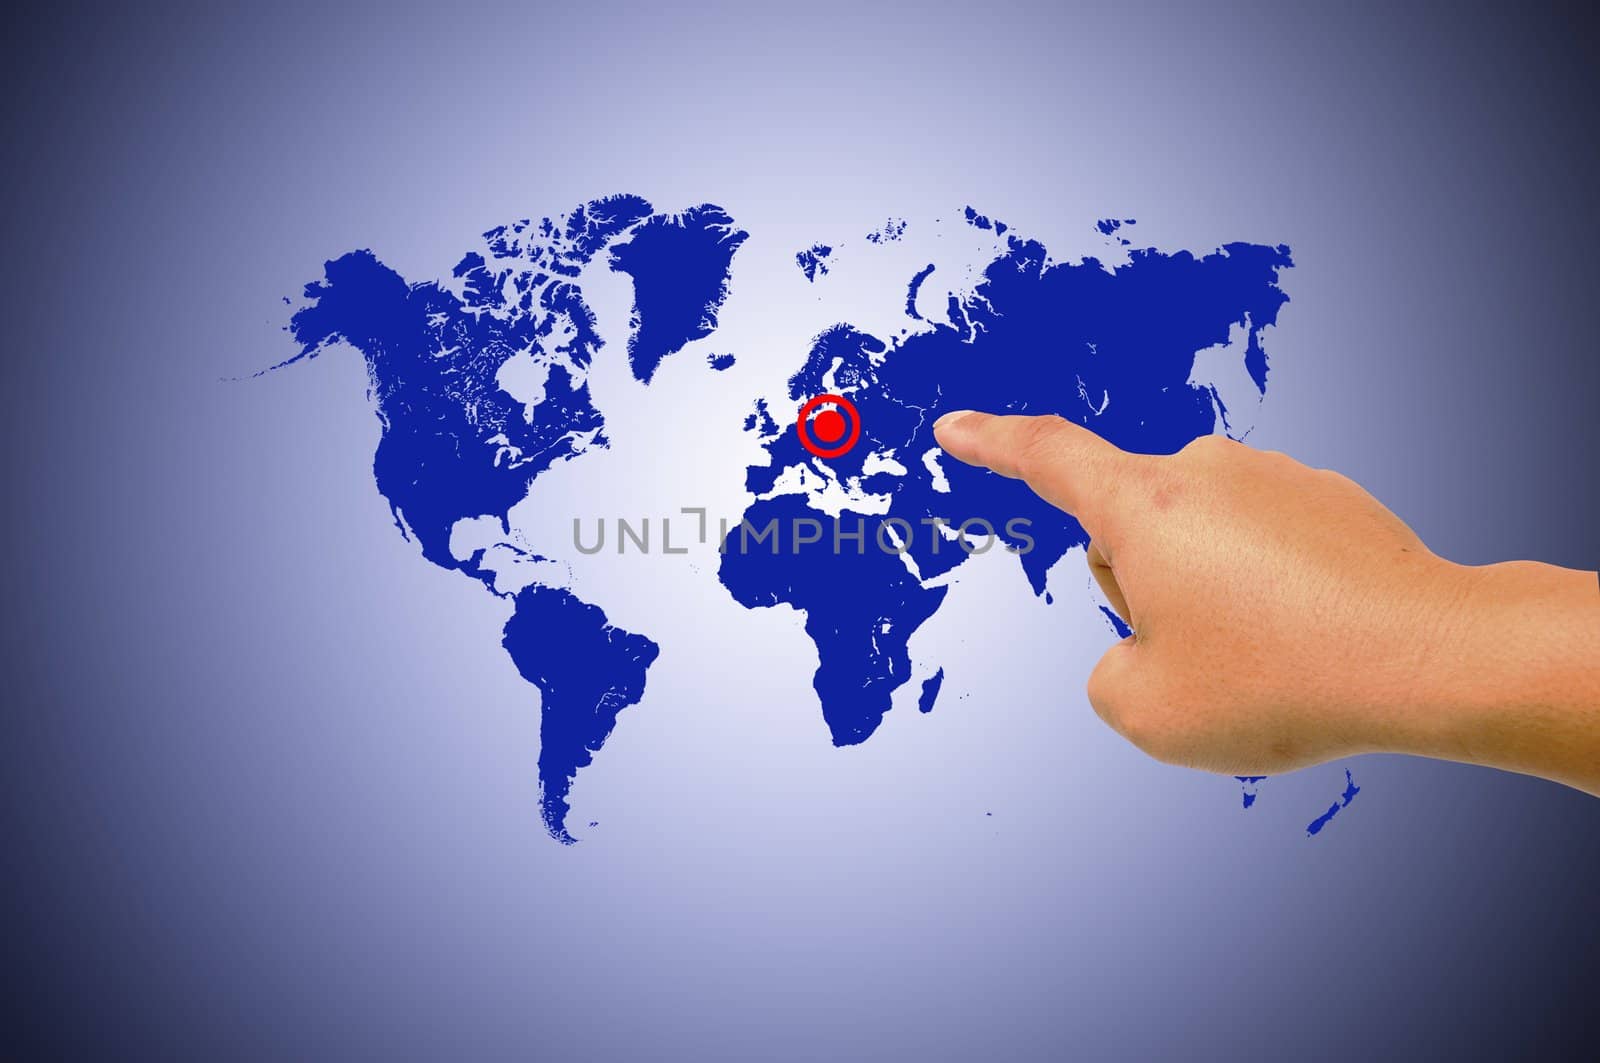 Human hands holding map world with digital symbols